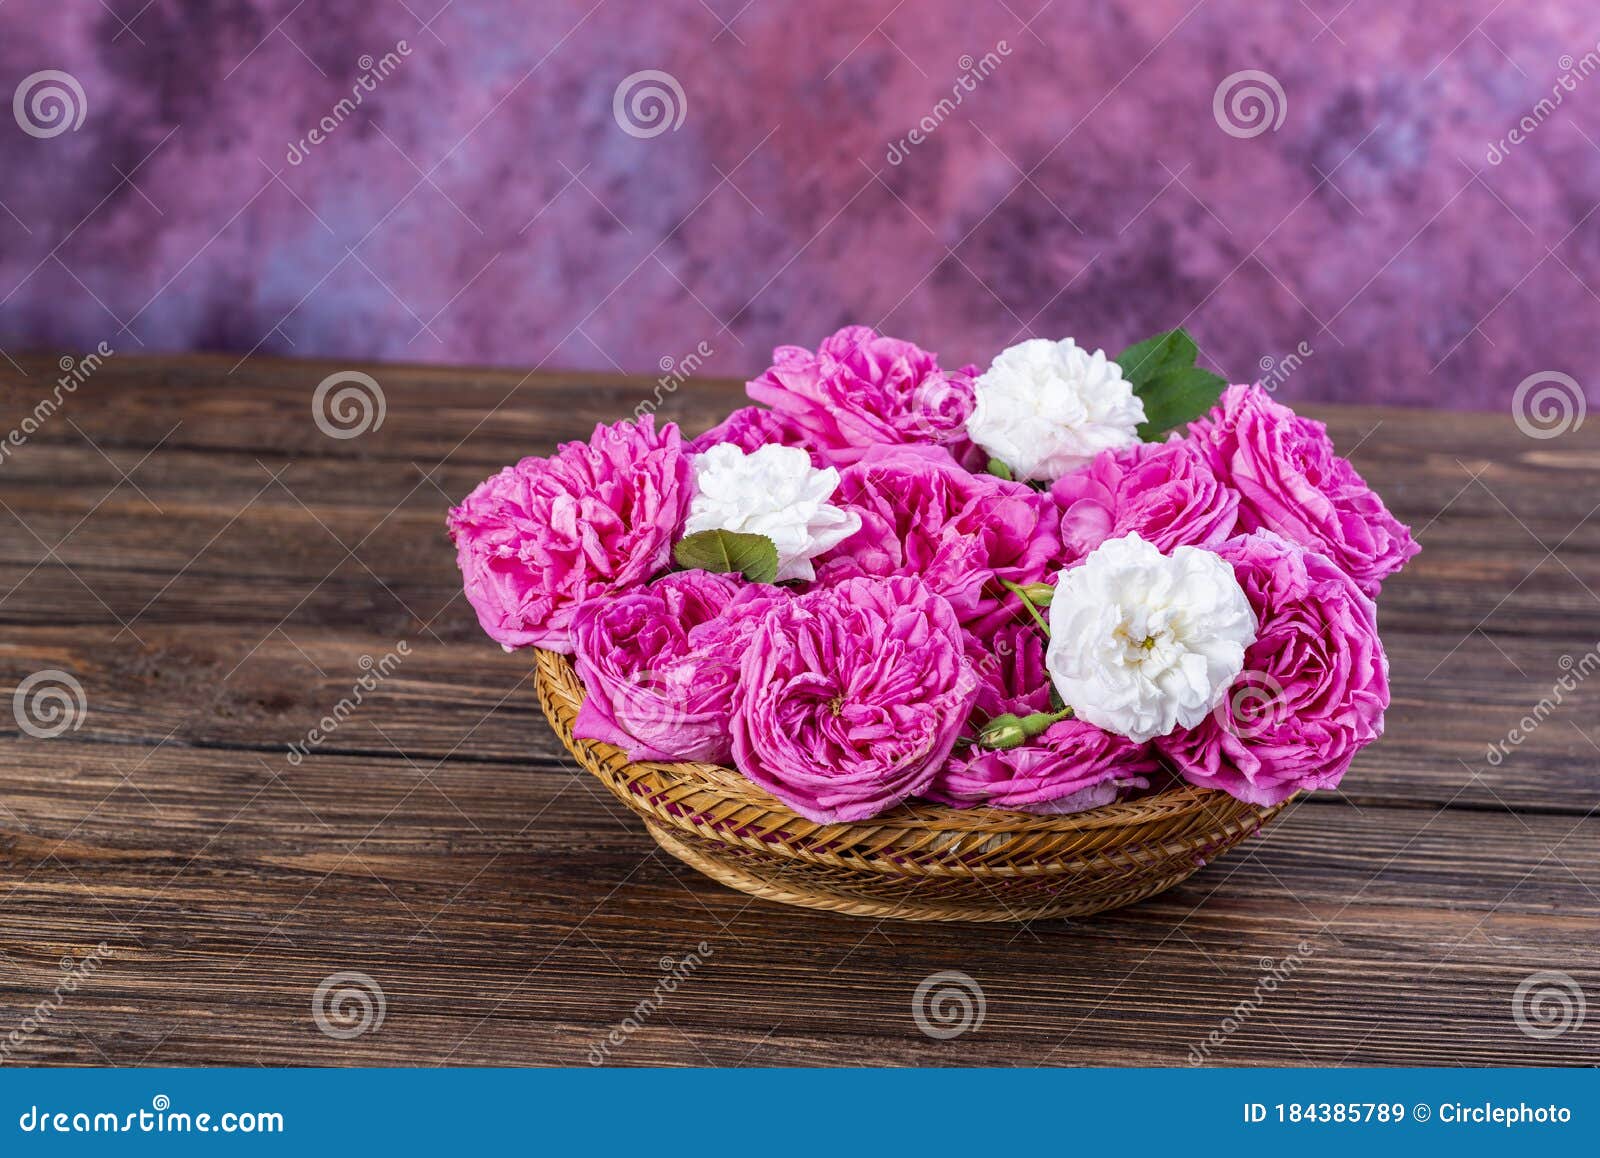 Pink Damask Rose Flowers Rosa Damascena Stock Image Image Of Flora Garden 184385789